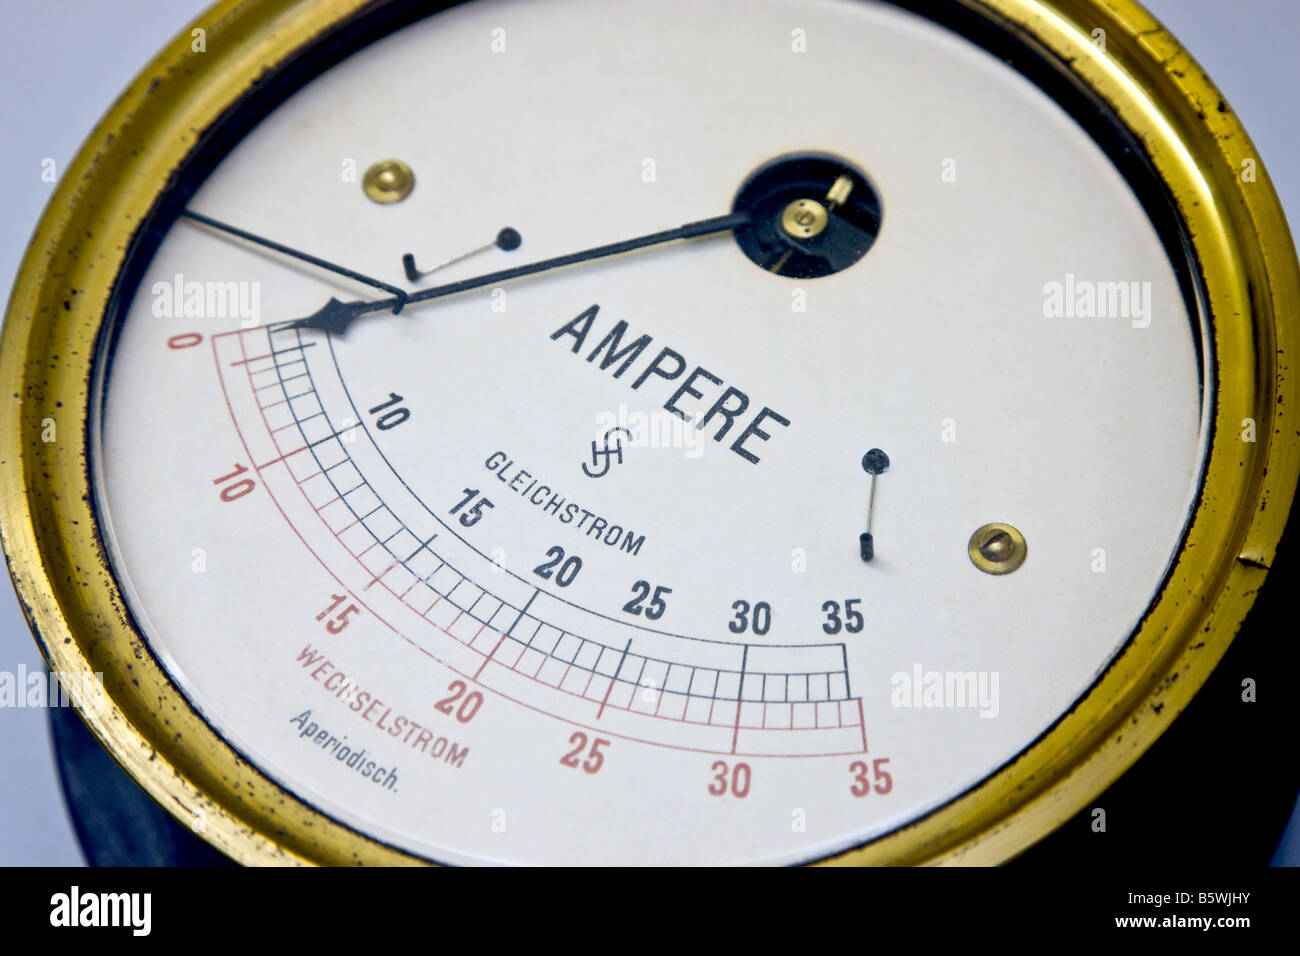 Old vintage ampere meter Stock Photo